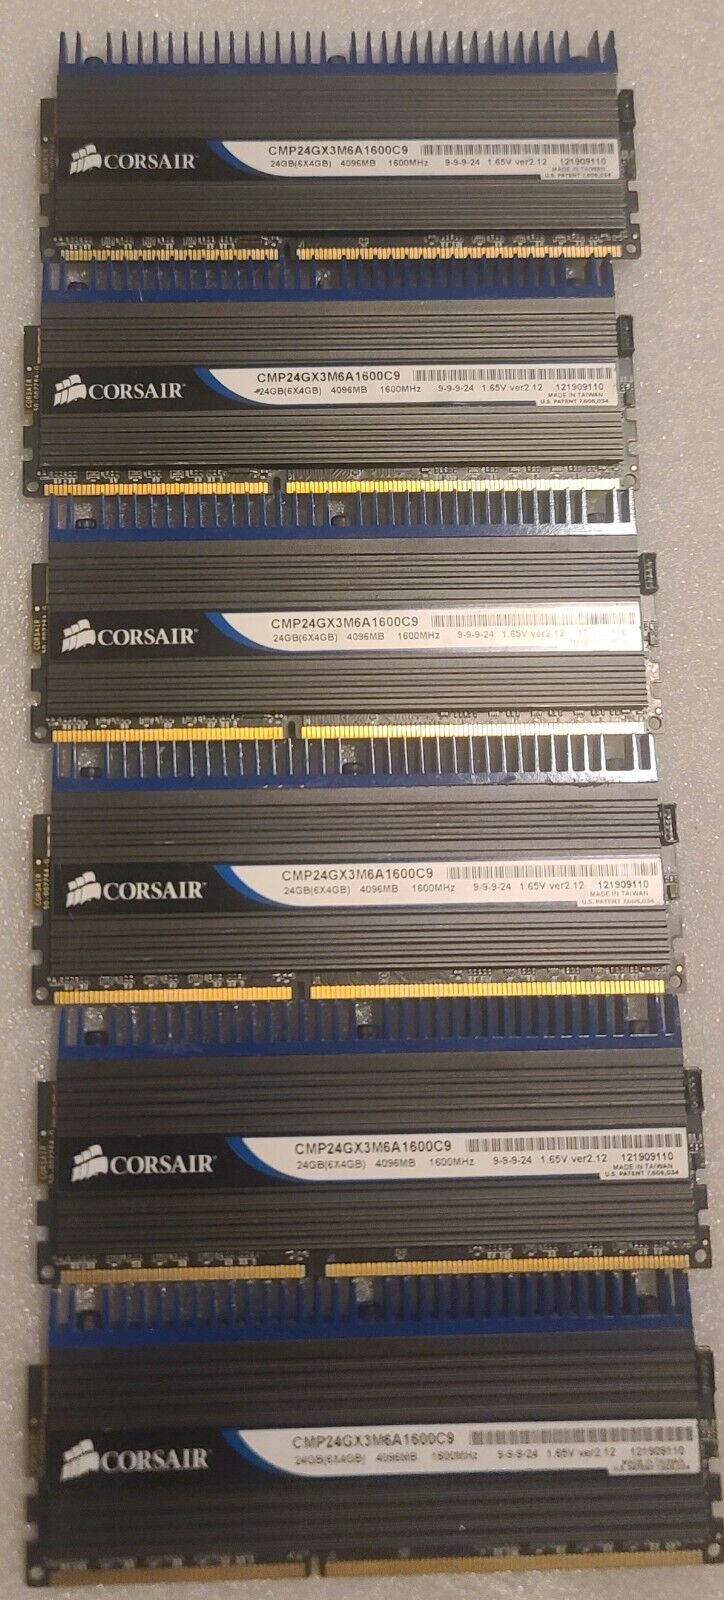 CORSAIR DOMINATOR 24GB (6 x 4GB) DDR3 1600 (PC3 12800) CMP24GX3M6A1600C9